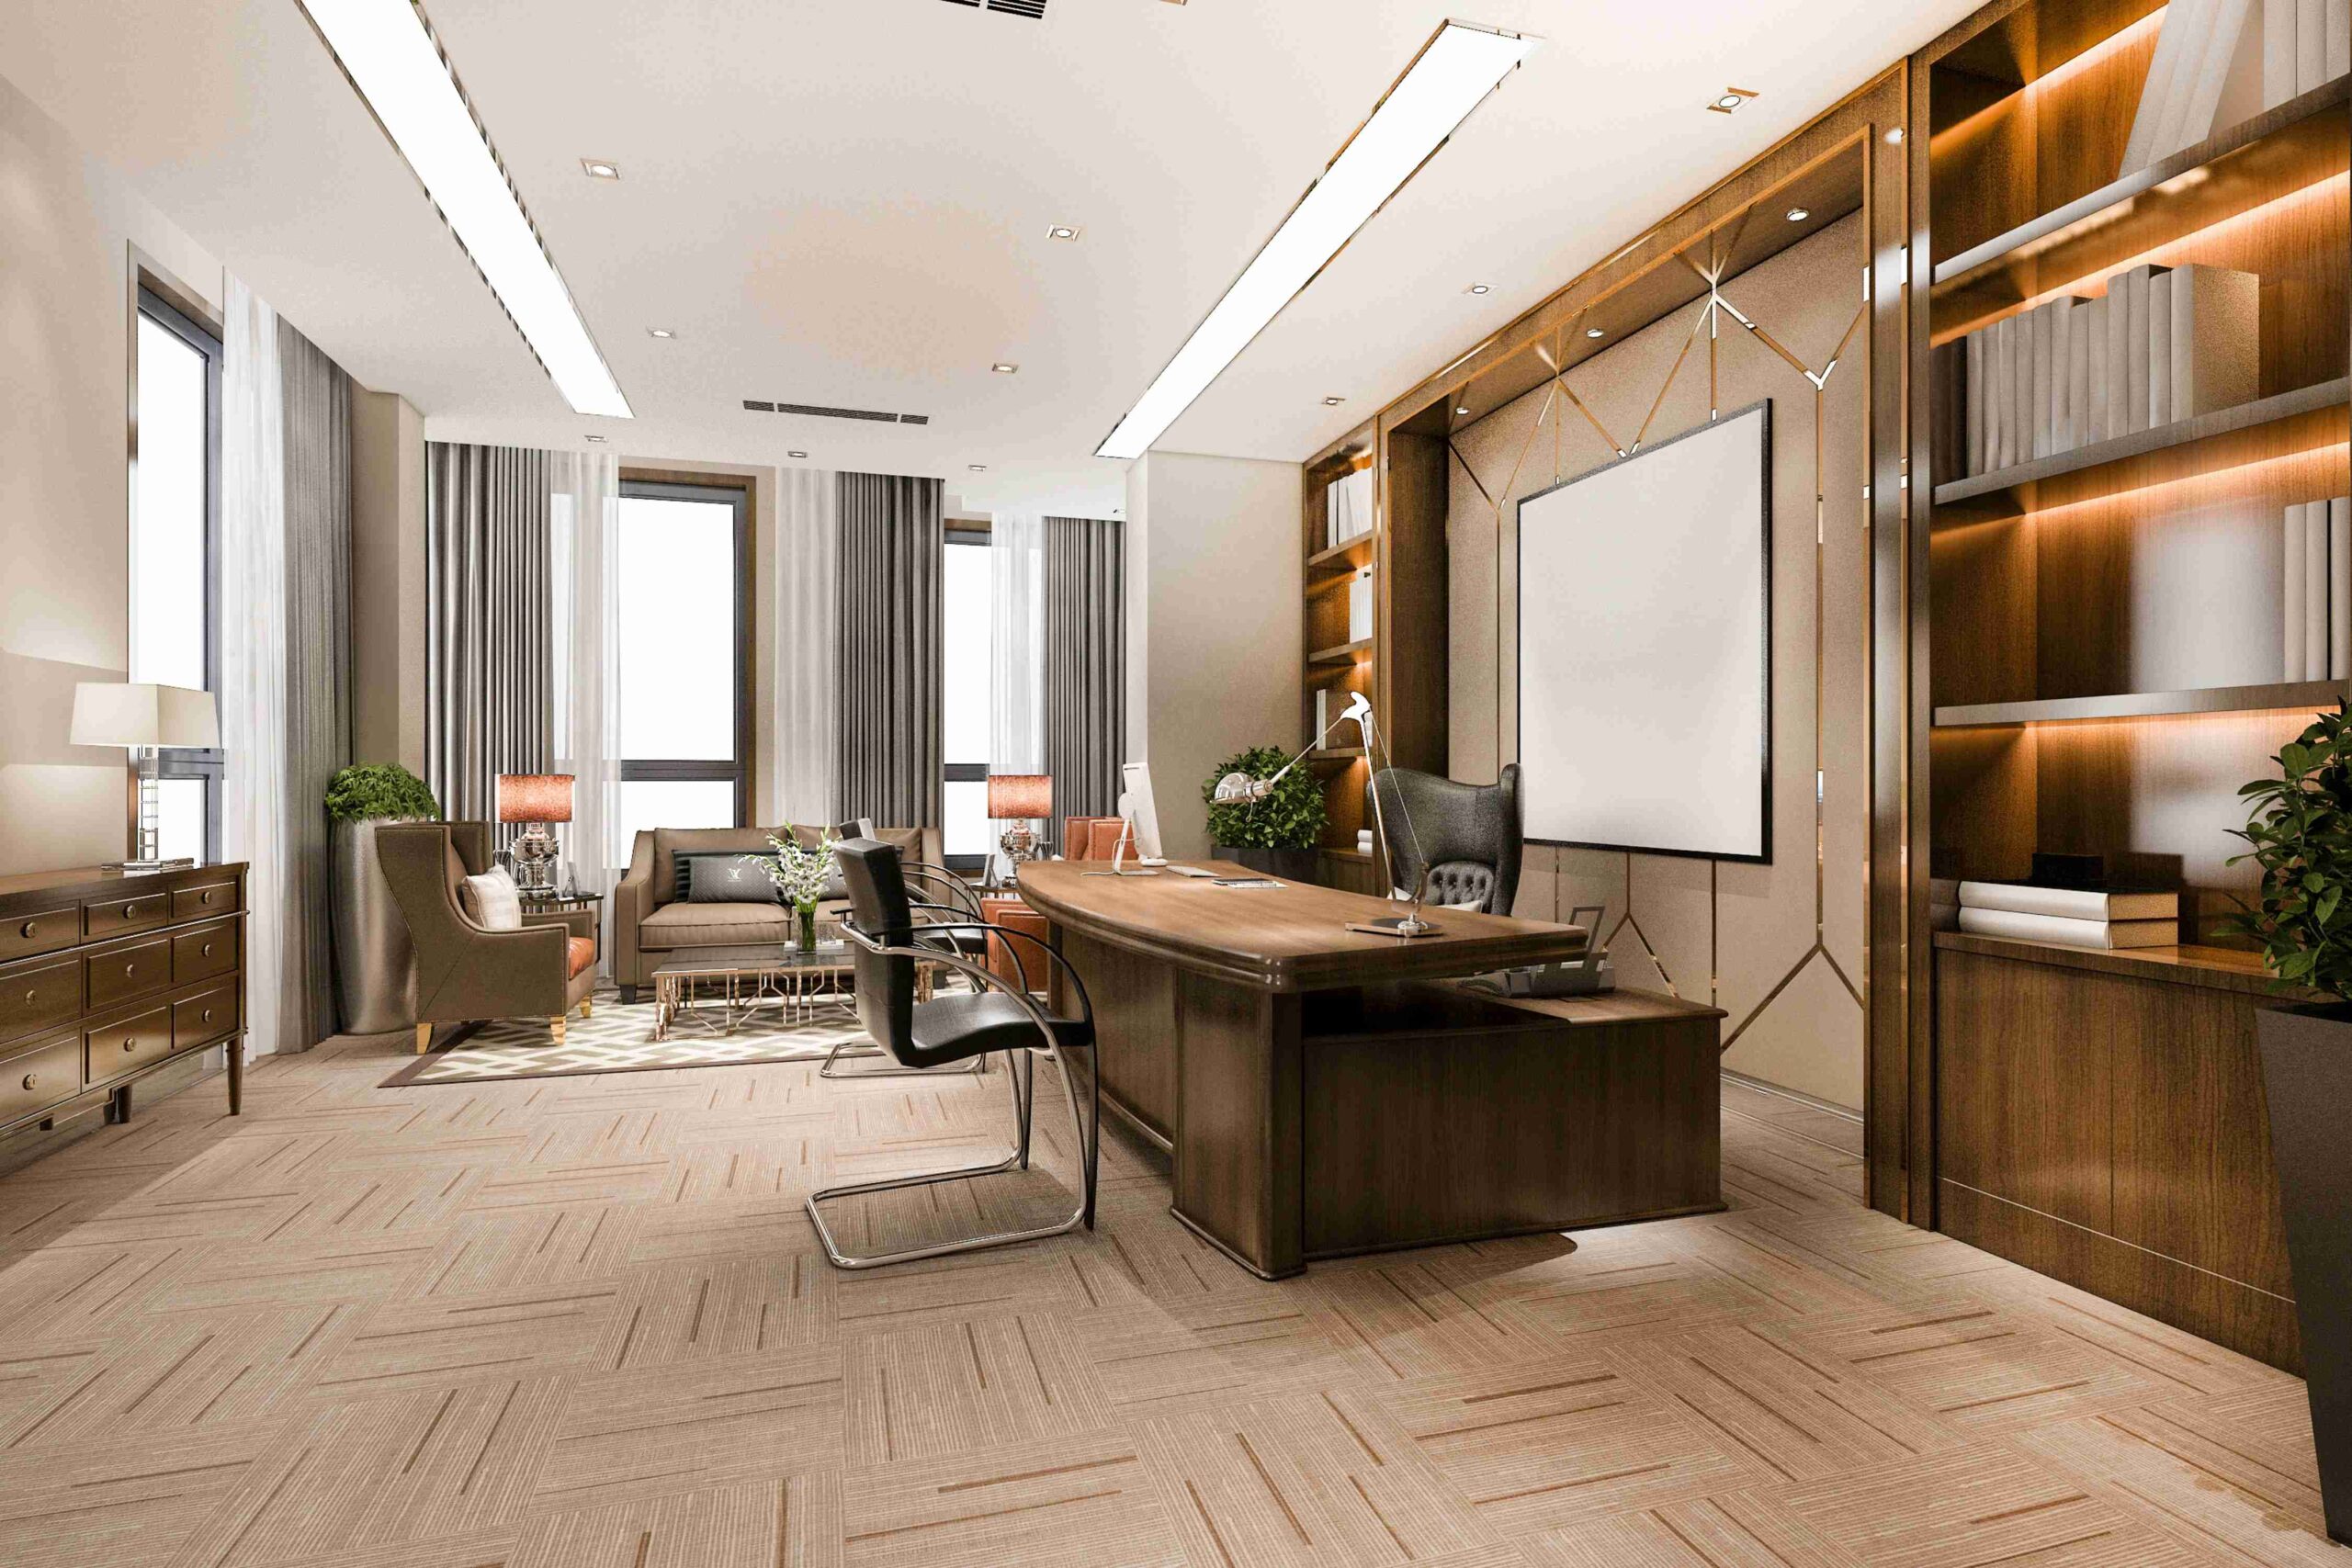 Luxury office furniture